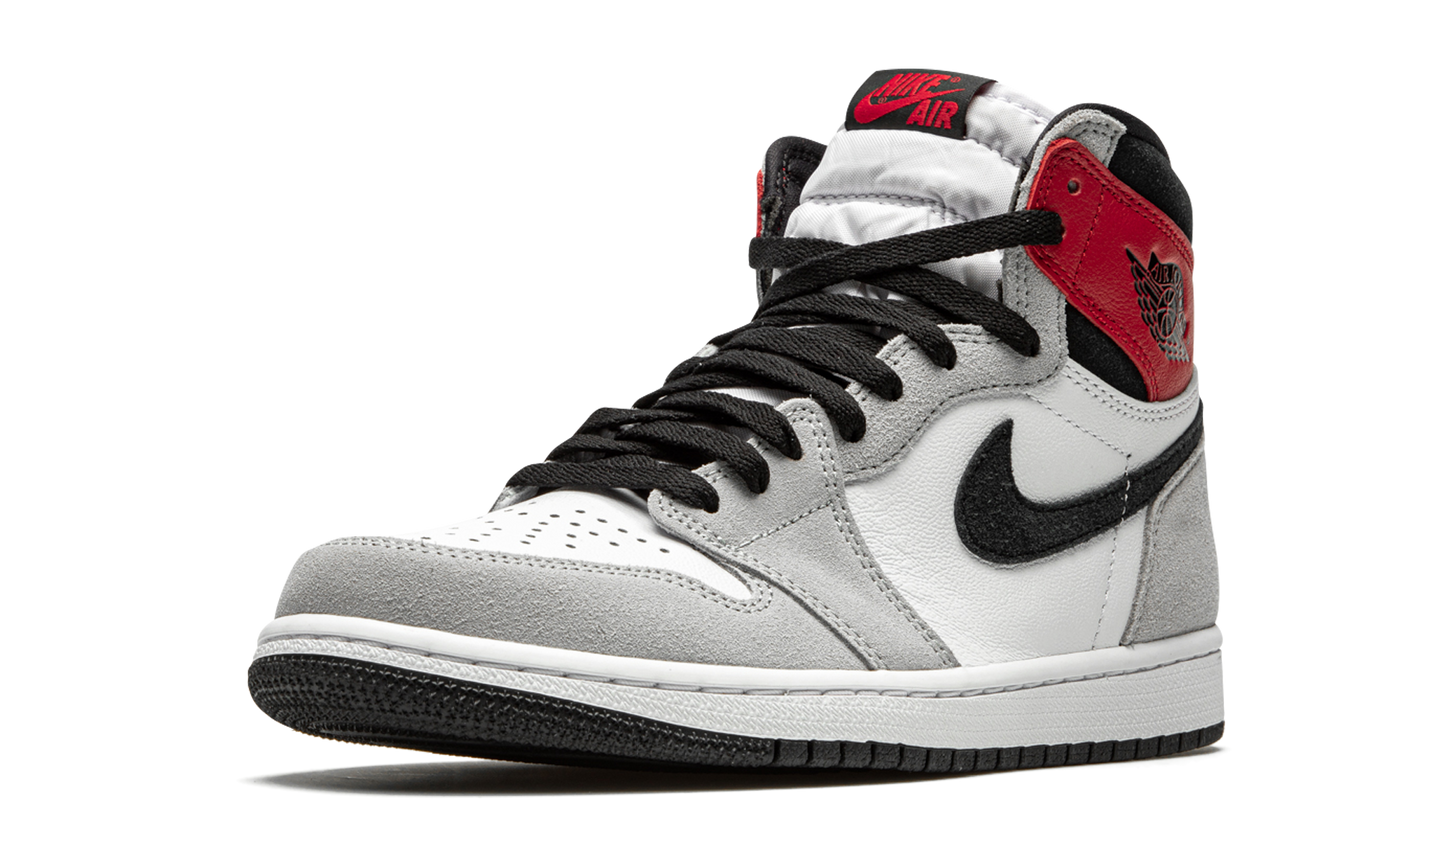 Nike Air Jordan 1 Retro High OG “Light Smoke Grey” - 555088 126 - 2020